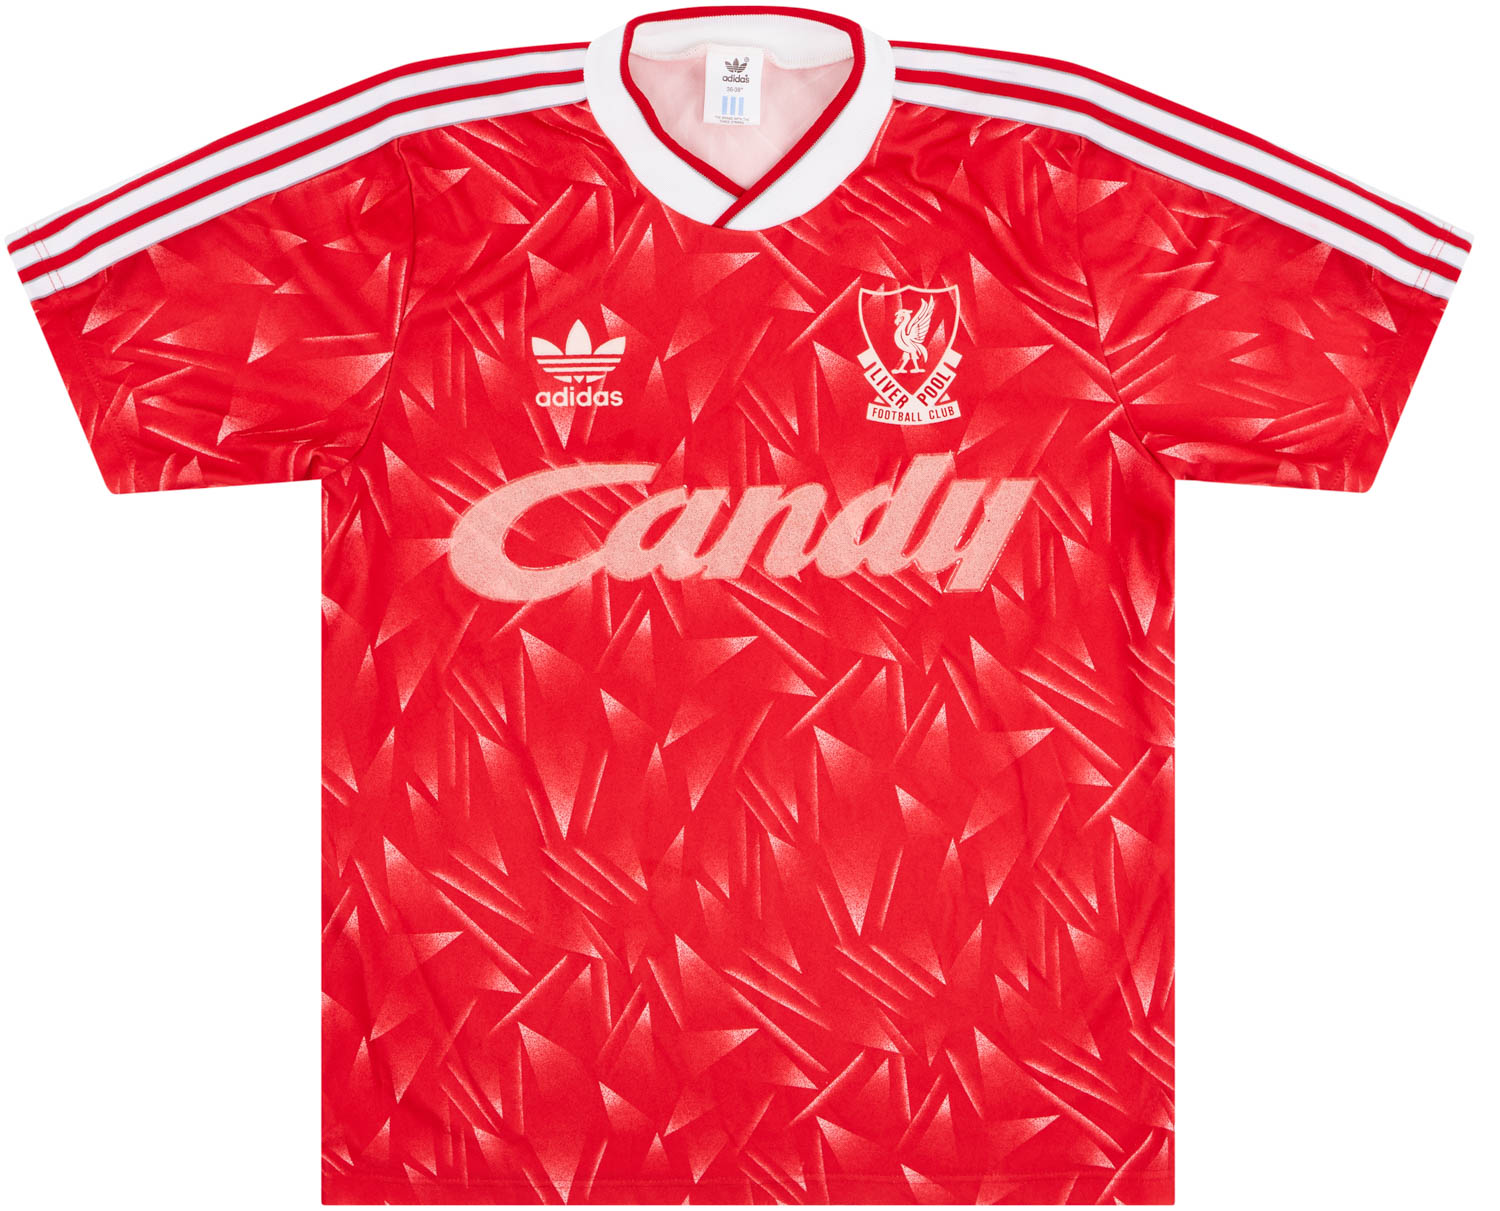 1989-91 Liverpool Home Shirt